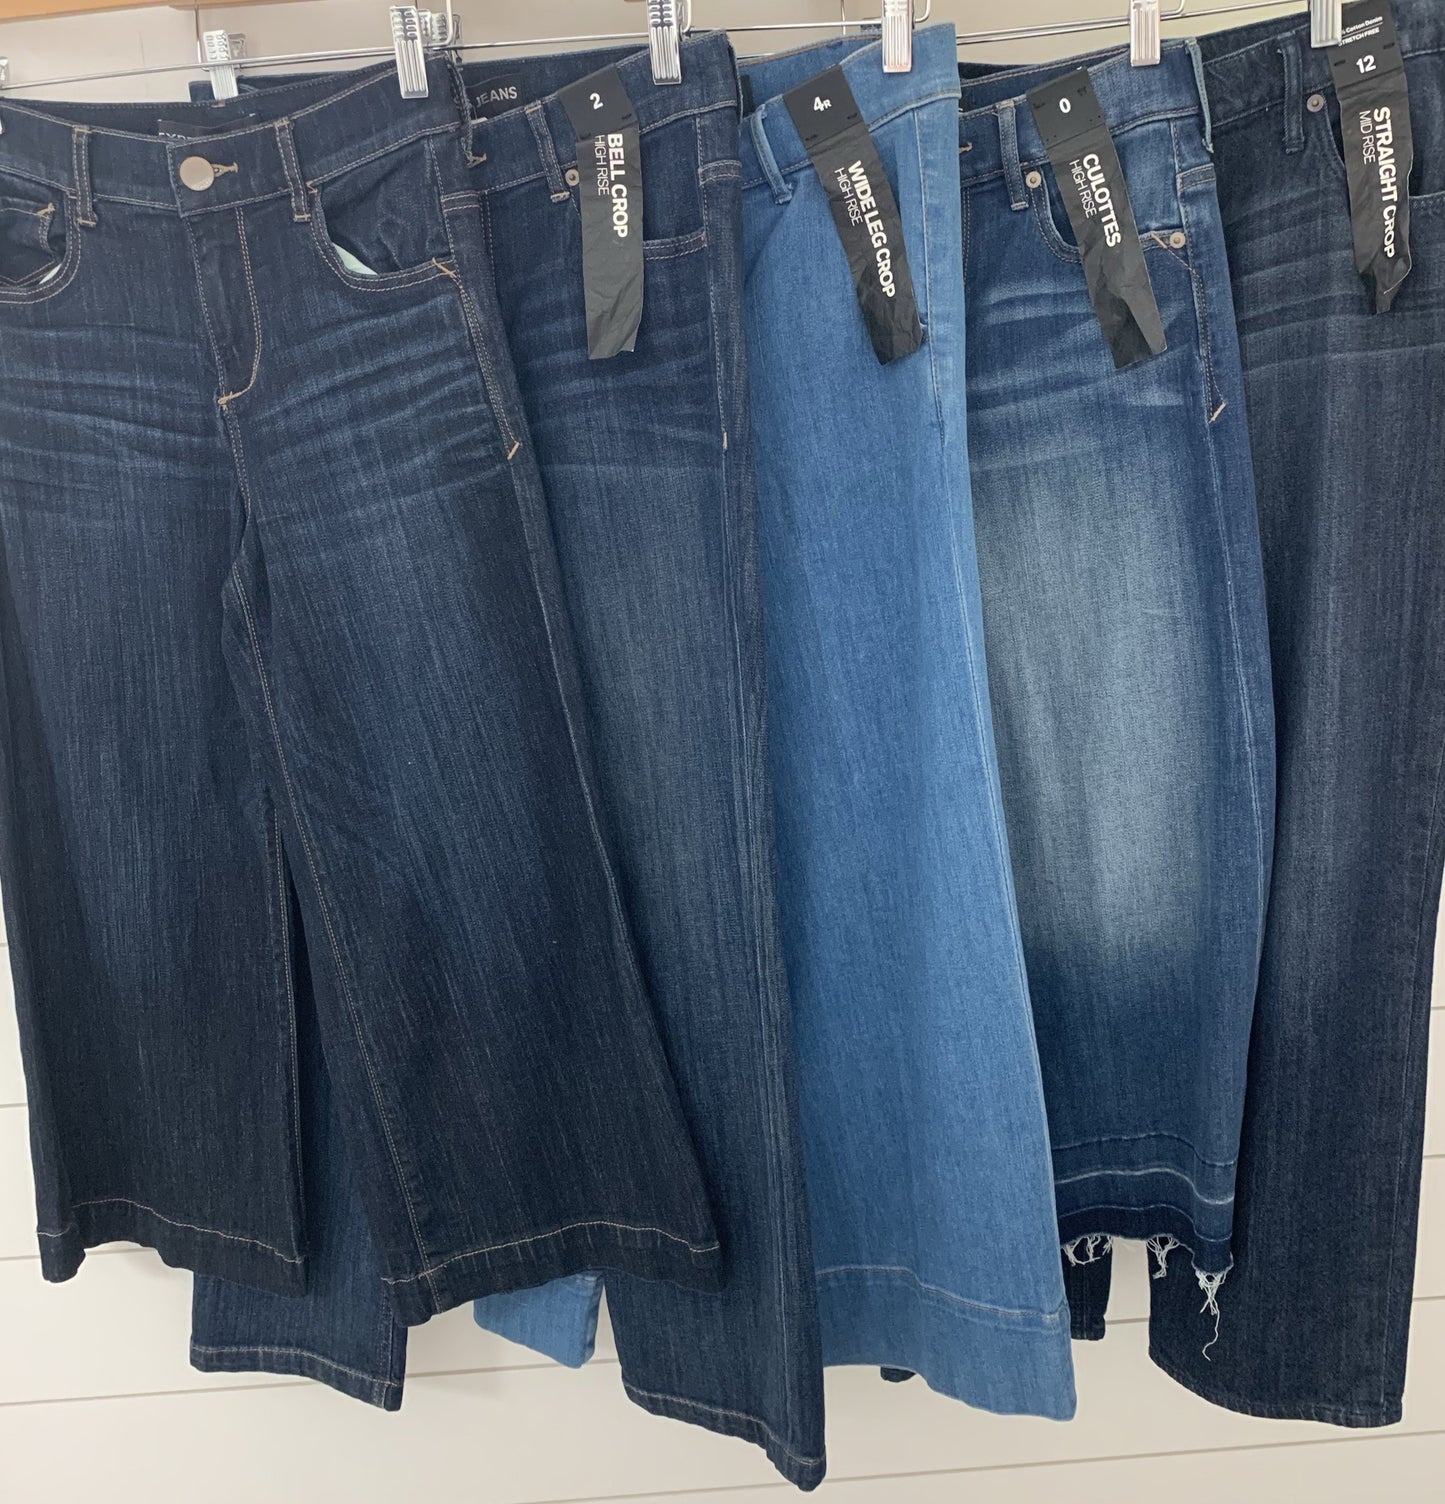 Express ladies capri/crop/culottes denim jeans